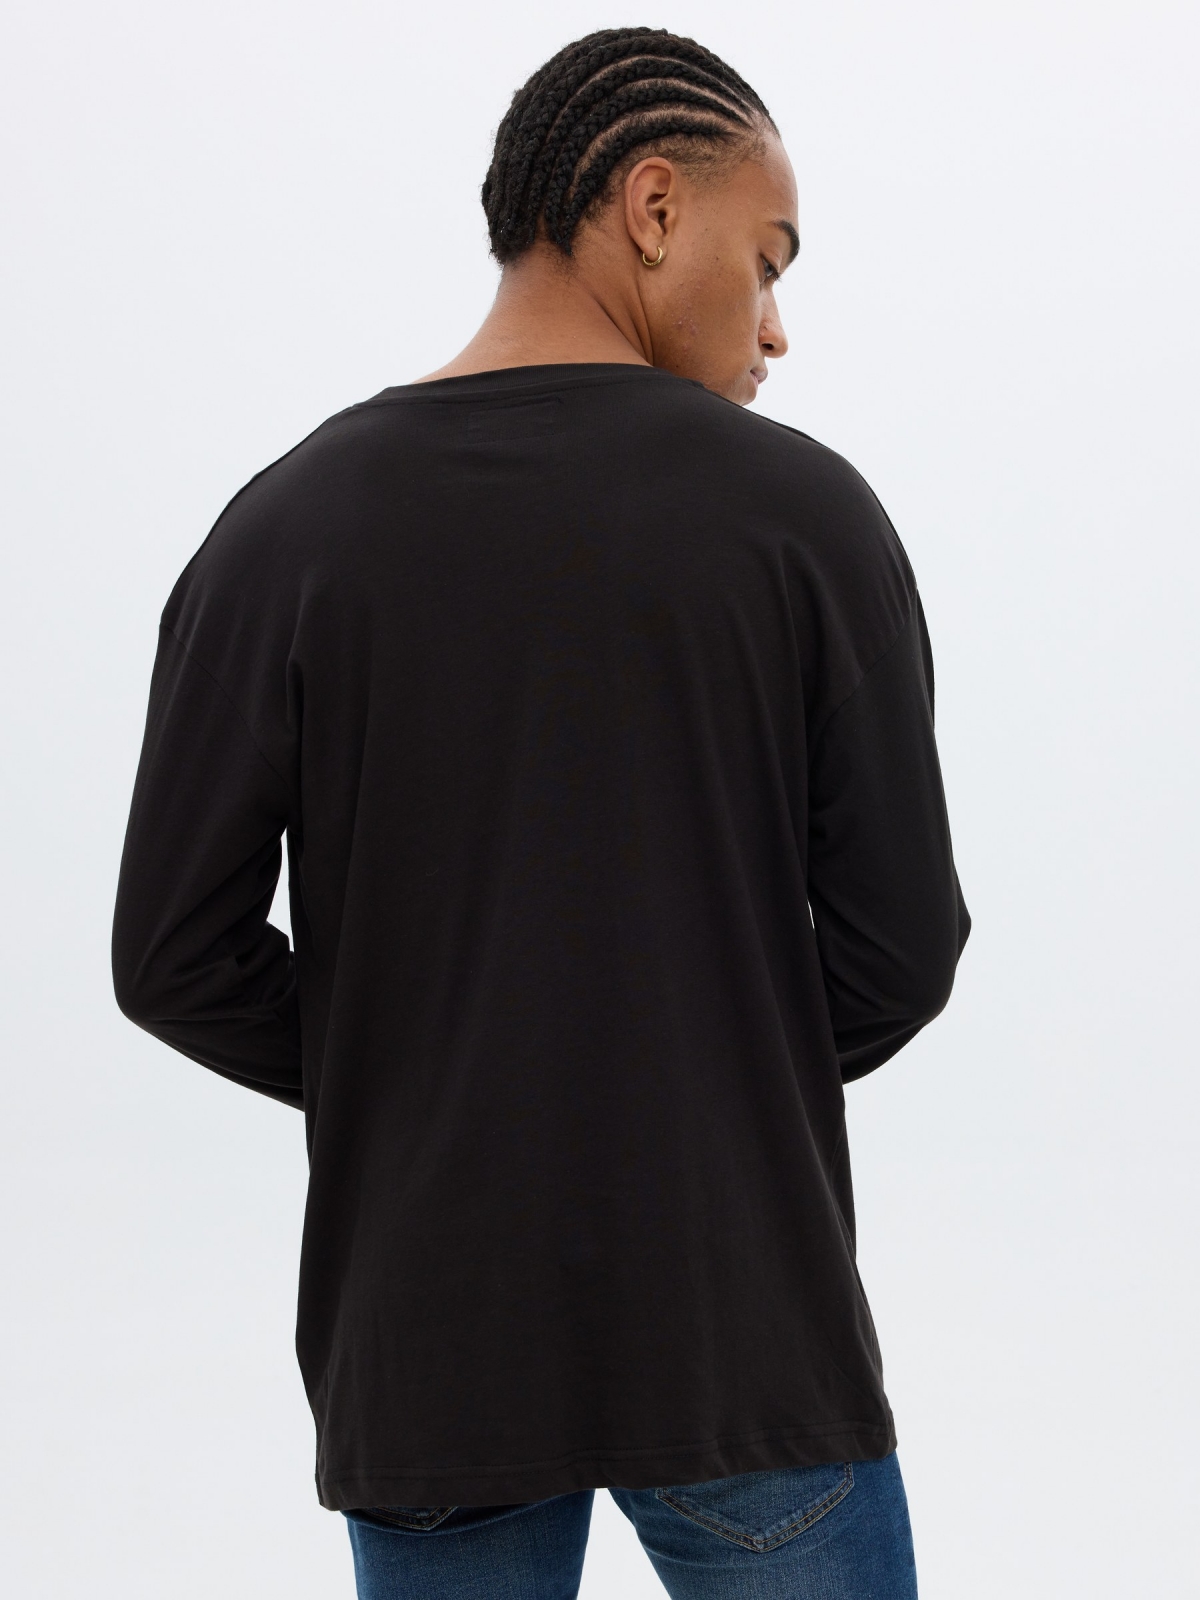 Camiseta estampado urbano negro vista media trasera